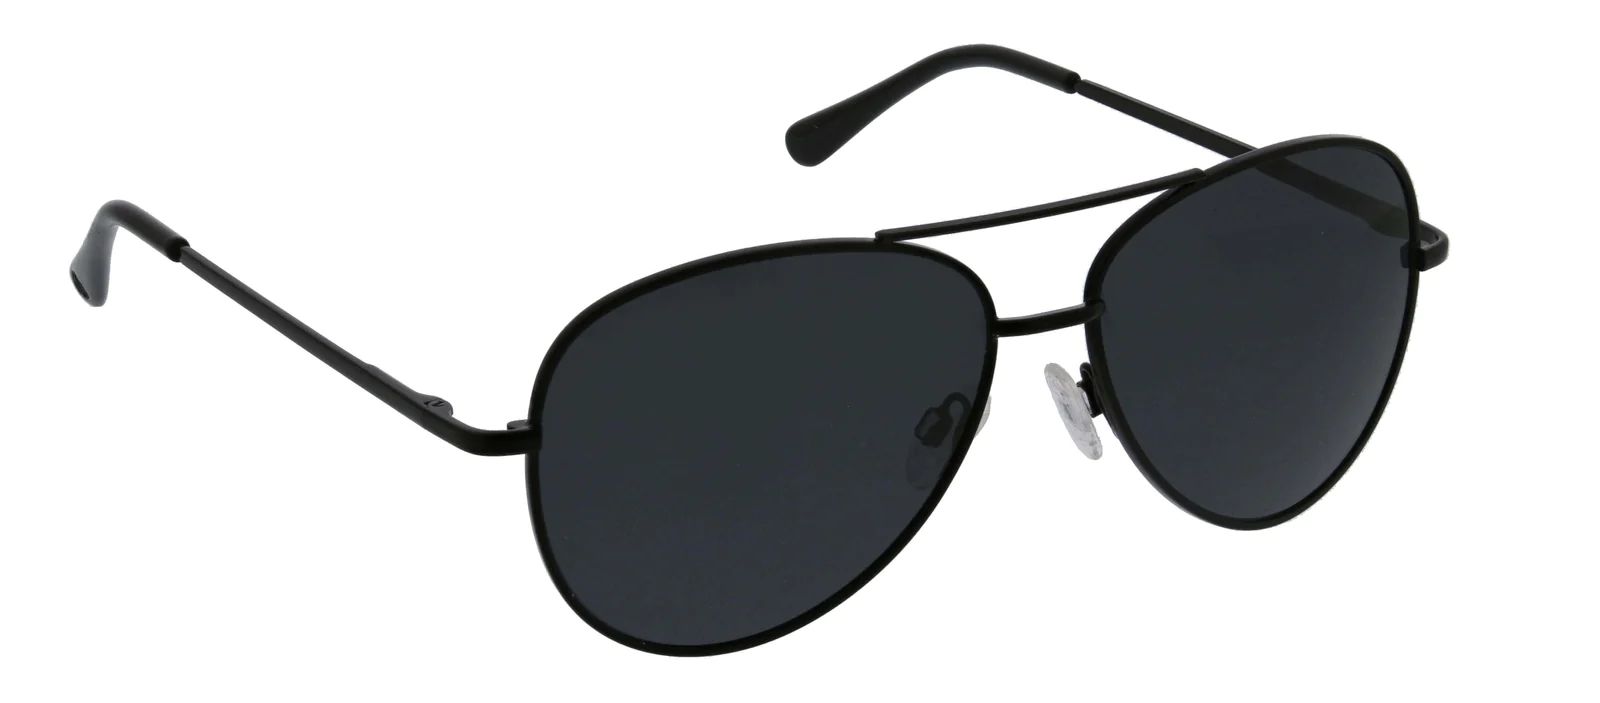 Heat Wave (Polarized Sunglasses) | PEEPERS